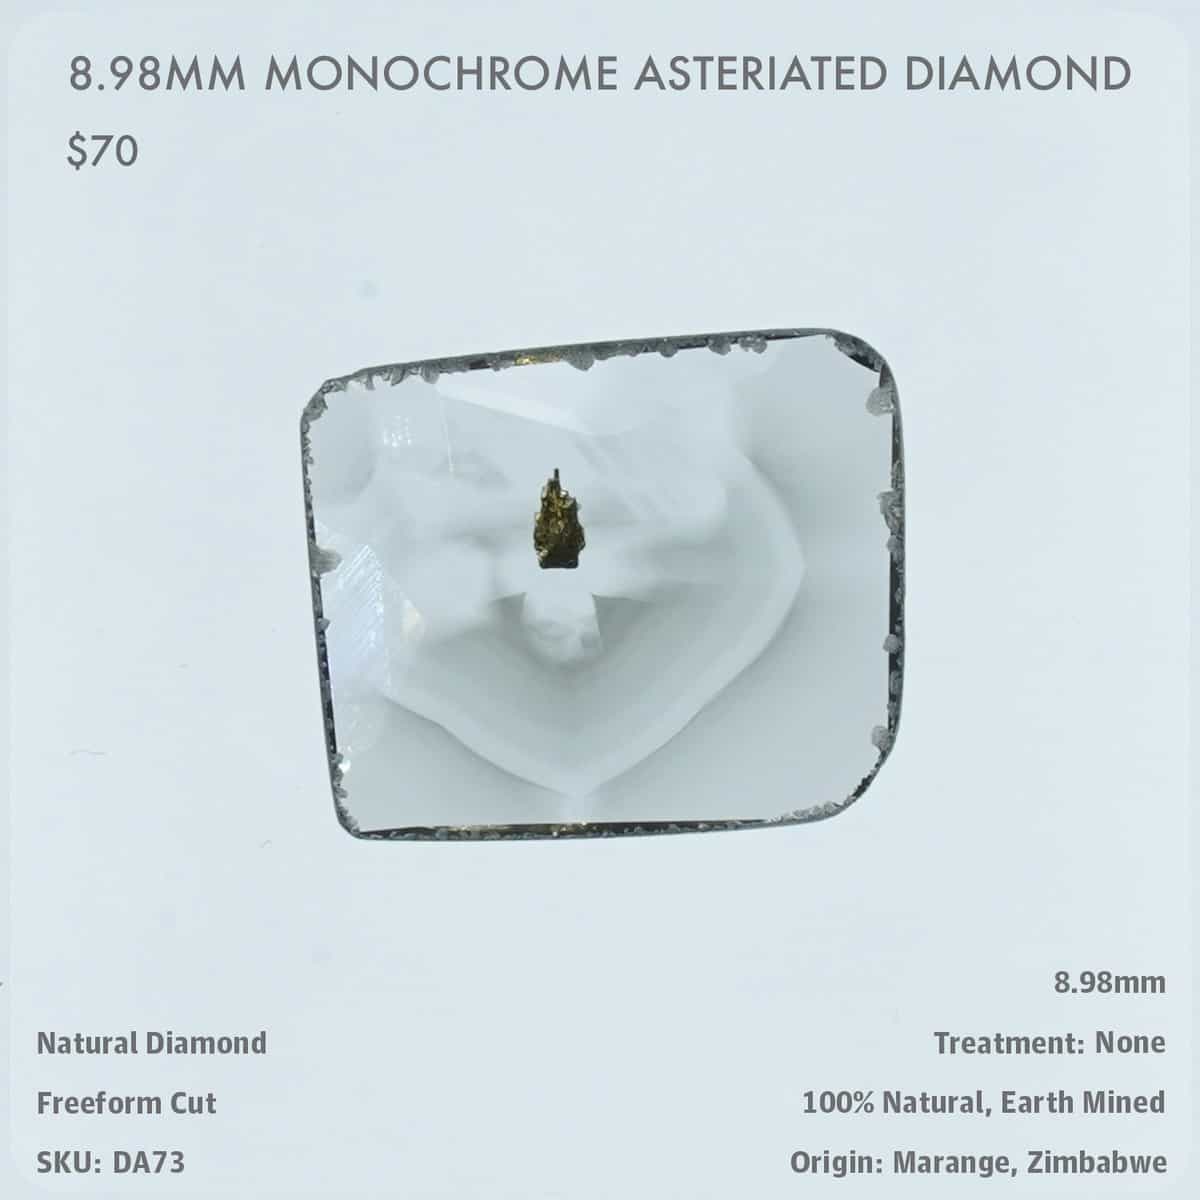 8.98mm Monochrome Asteriated Diamond